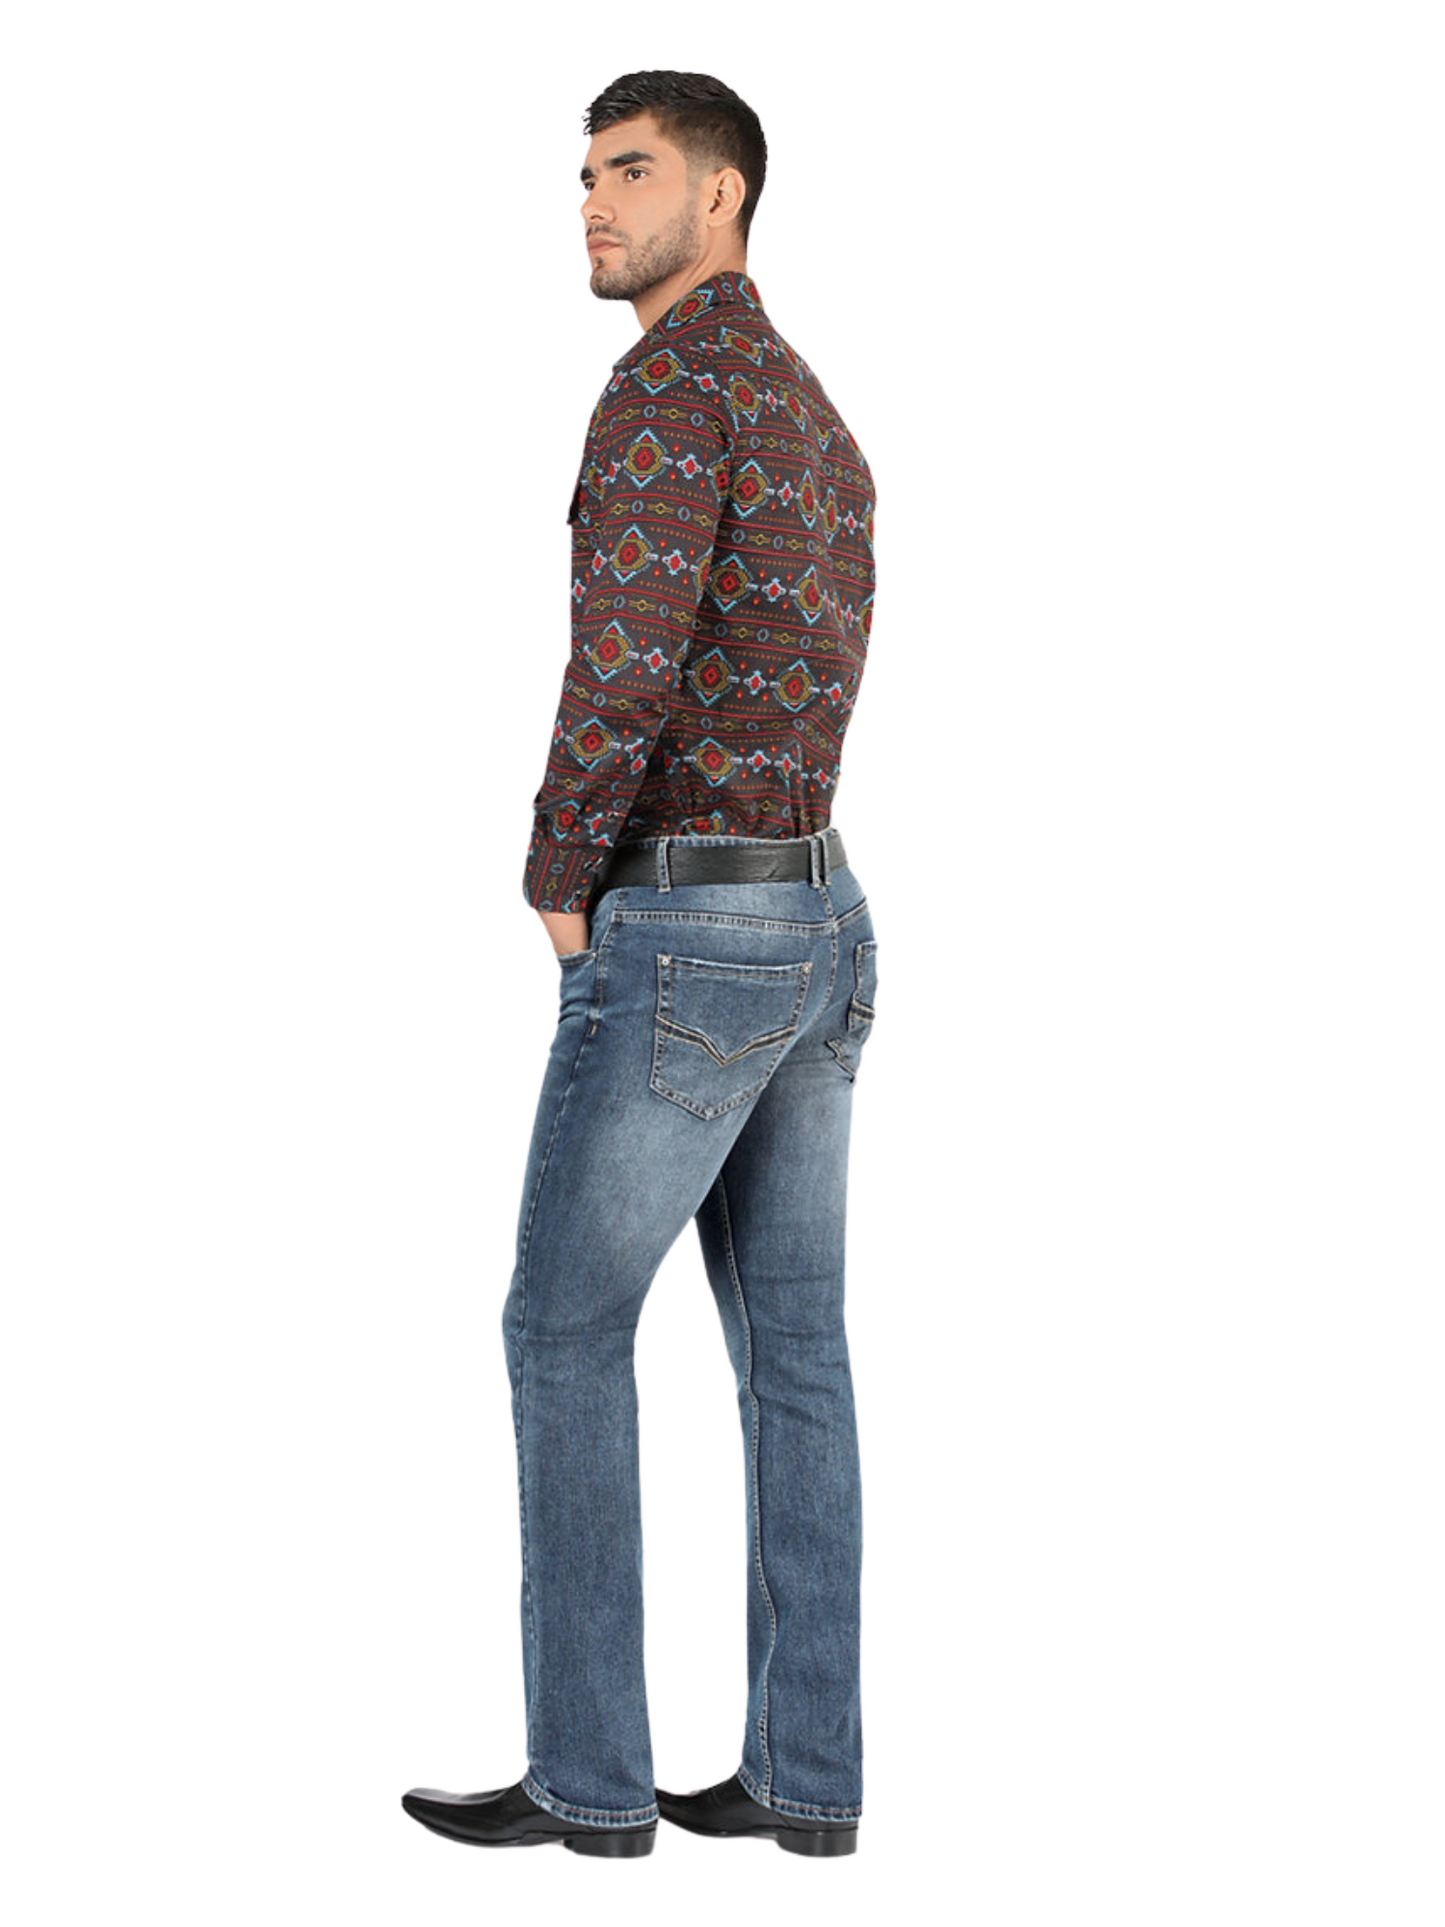 Stretch Denim Jeans for Men 'Montero' - ID: 5305 Denim Jeans Montero